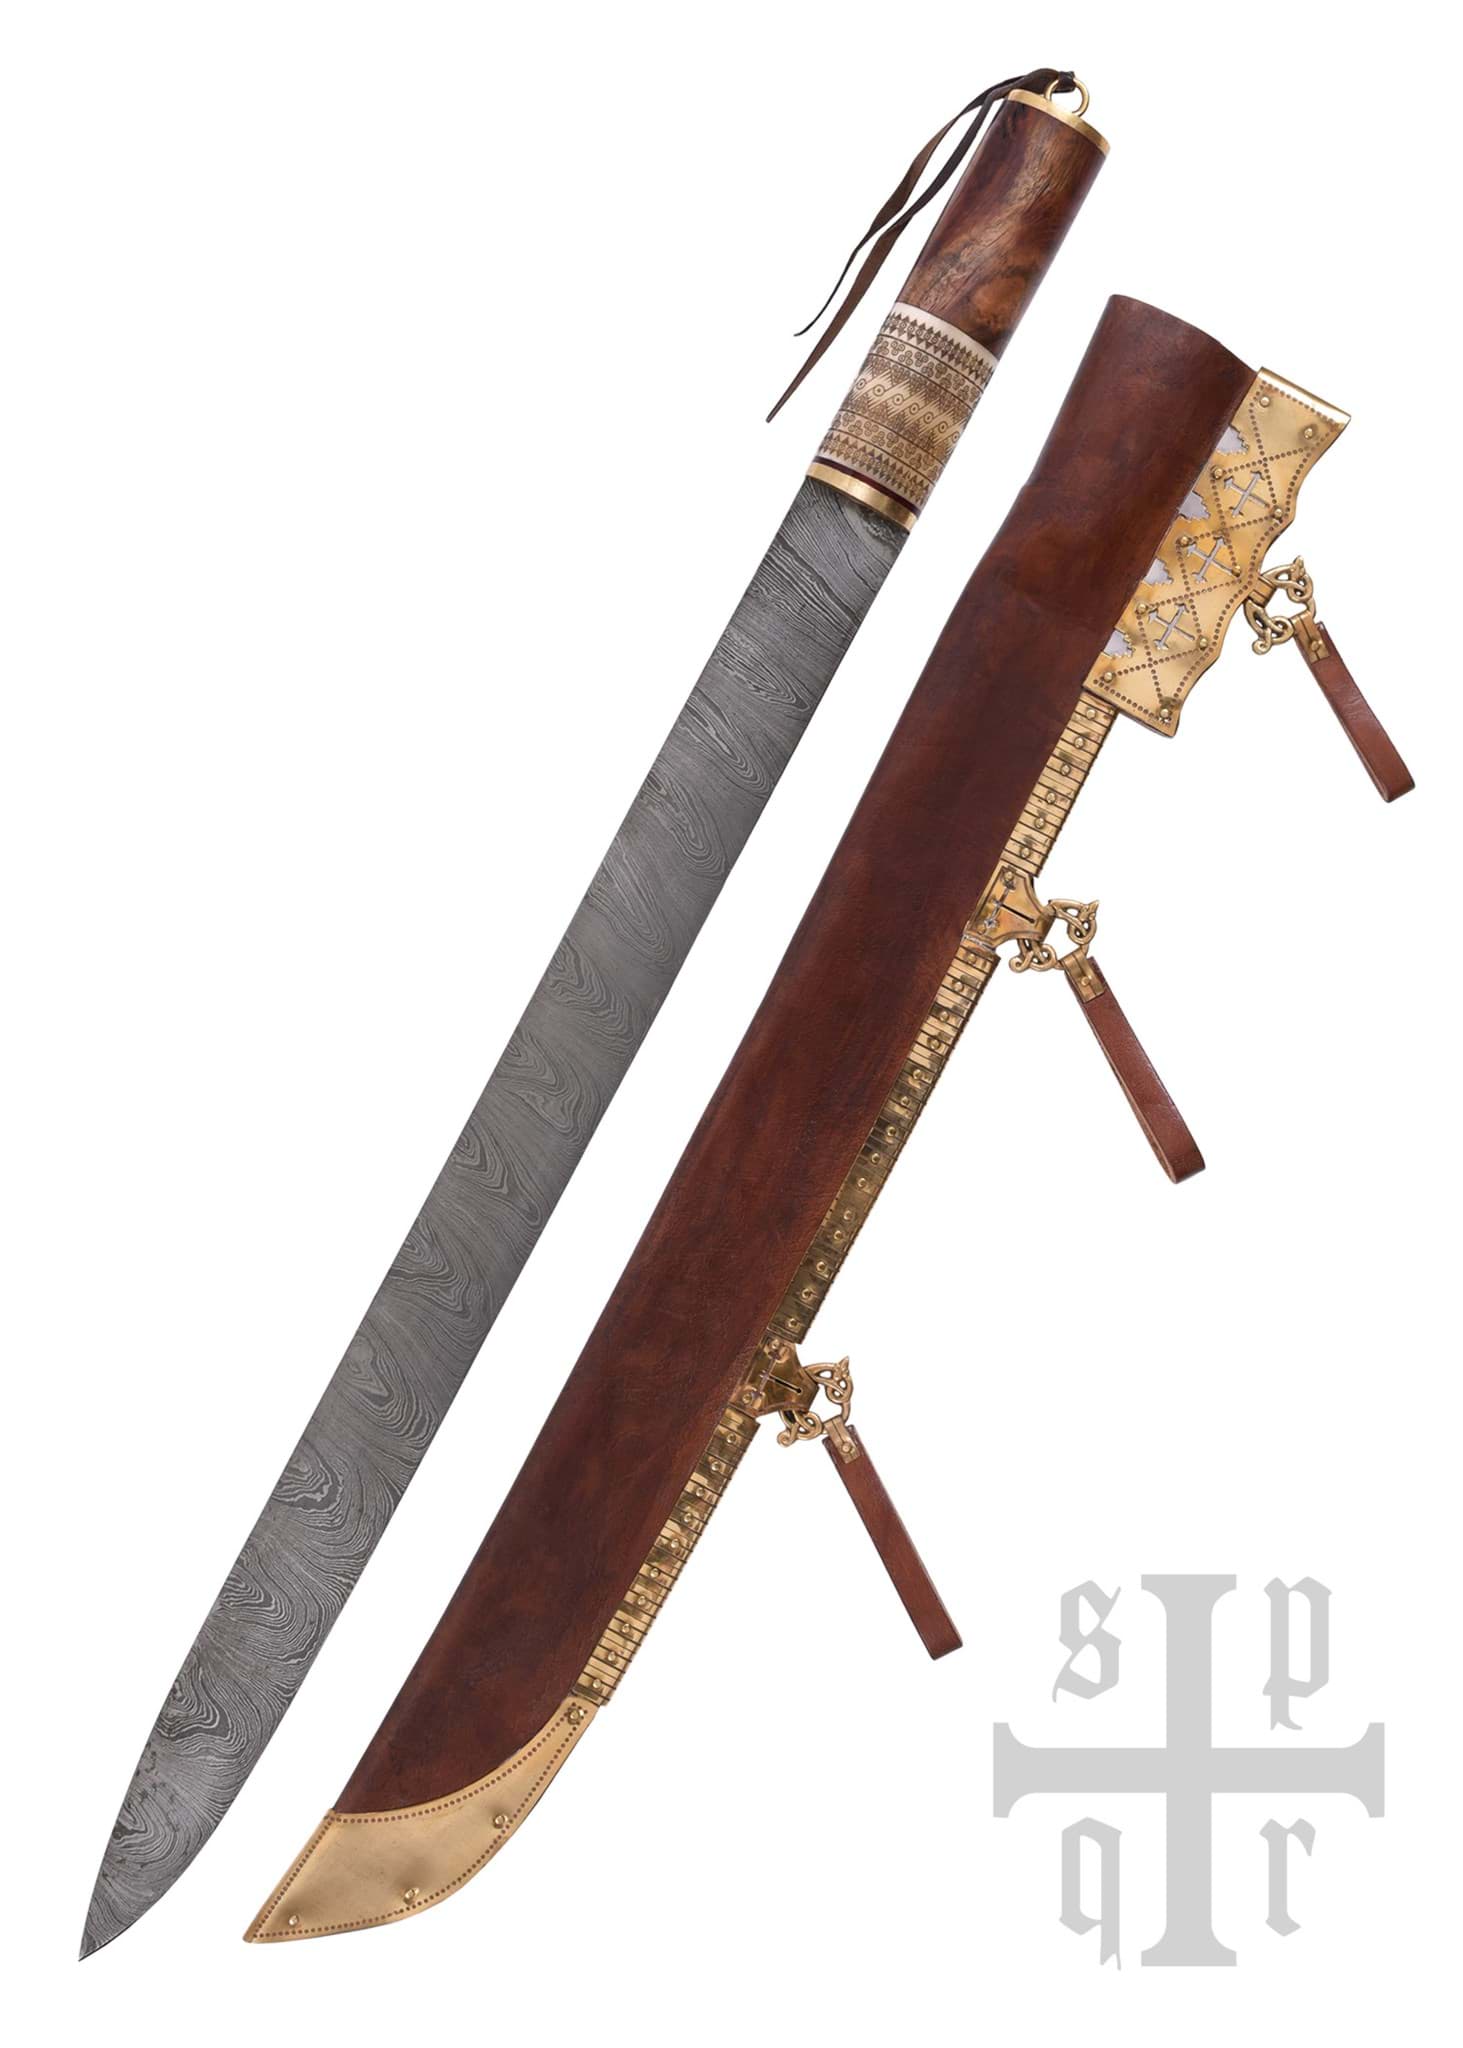 Image de SPQR - Sax long de Viking en acier damassé de Birka